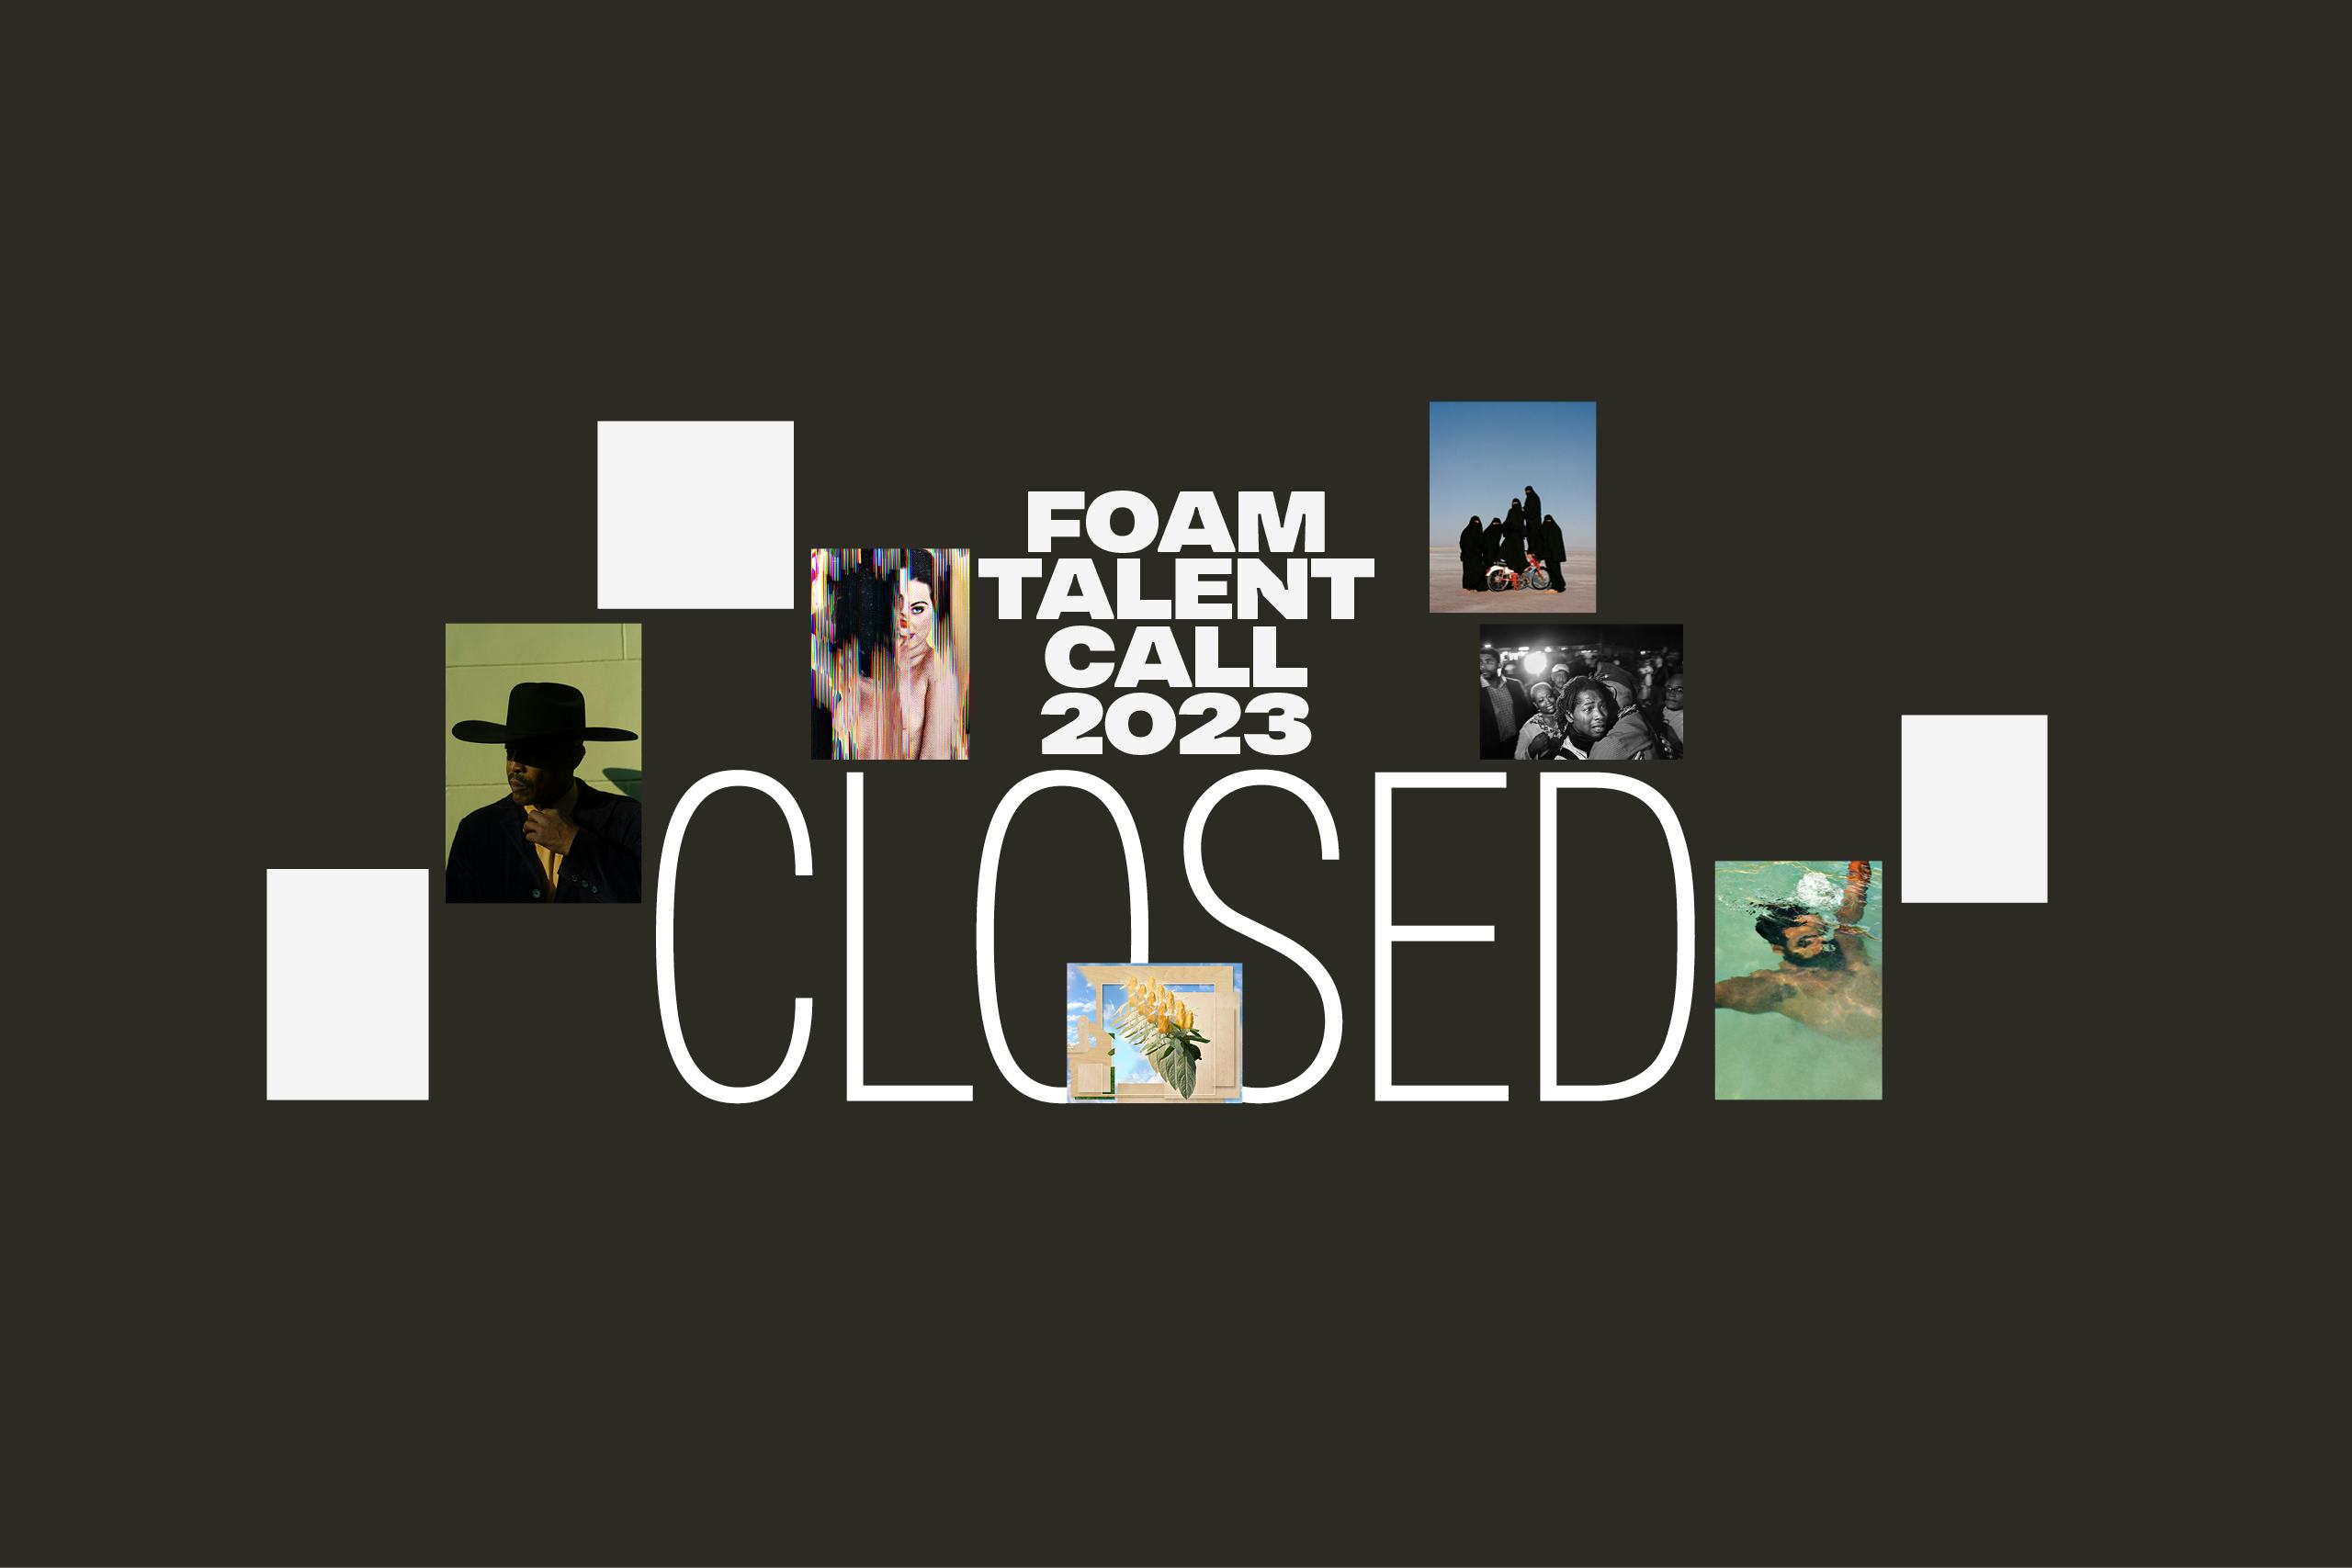 Foam Talent Call 2023 is closed